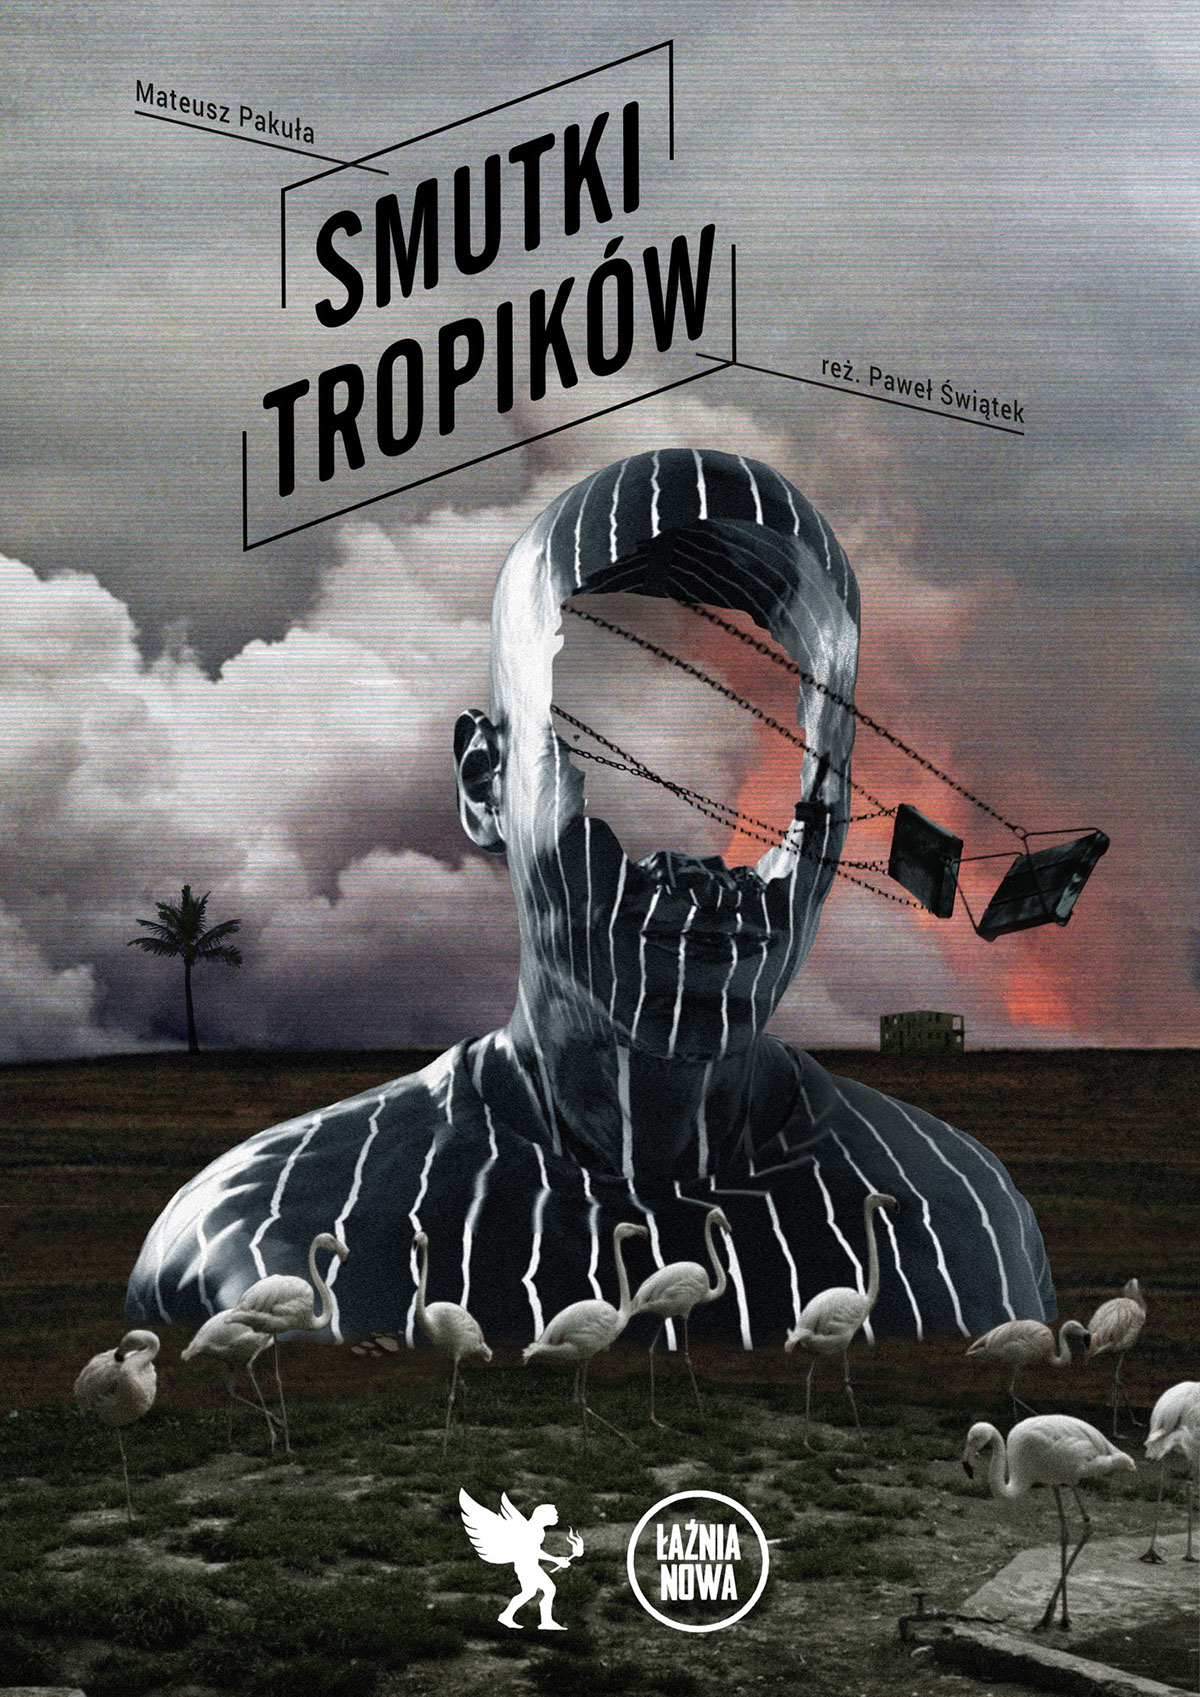 Theatre tropic krakow poland poster billboard print Backpackers Performance